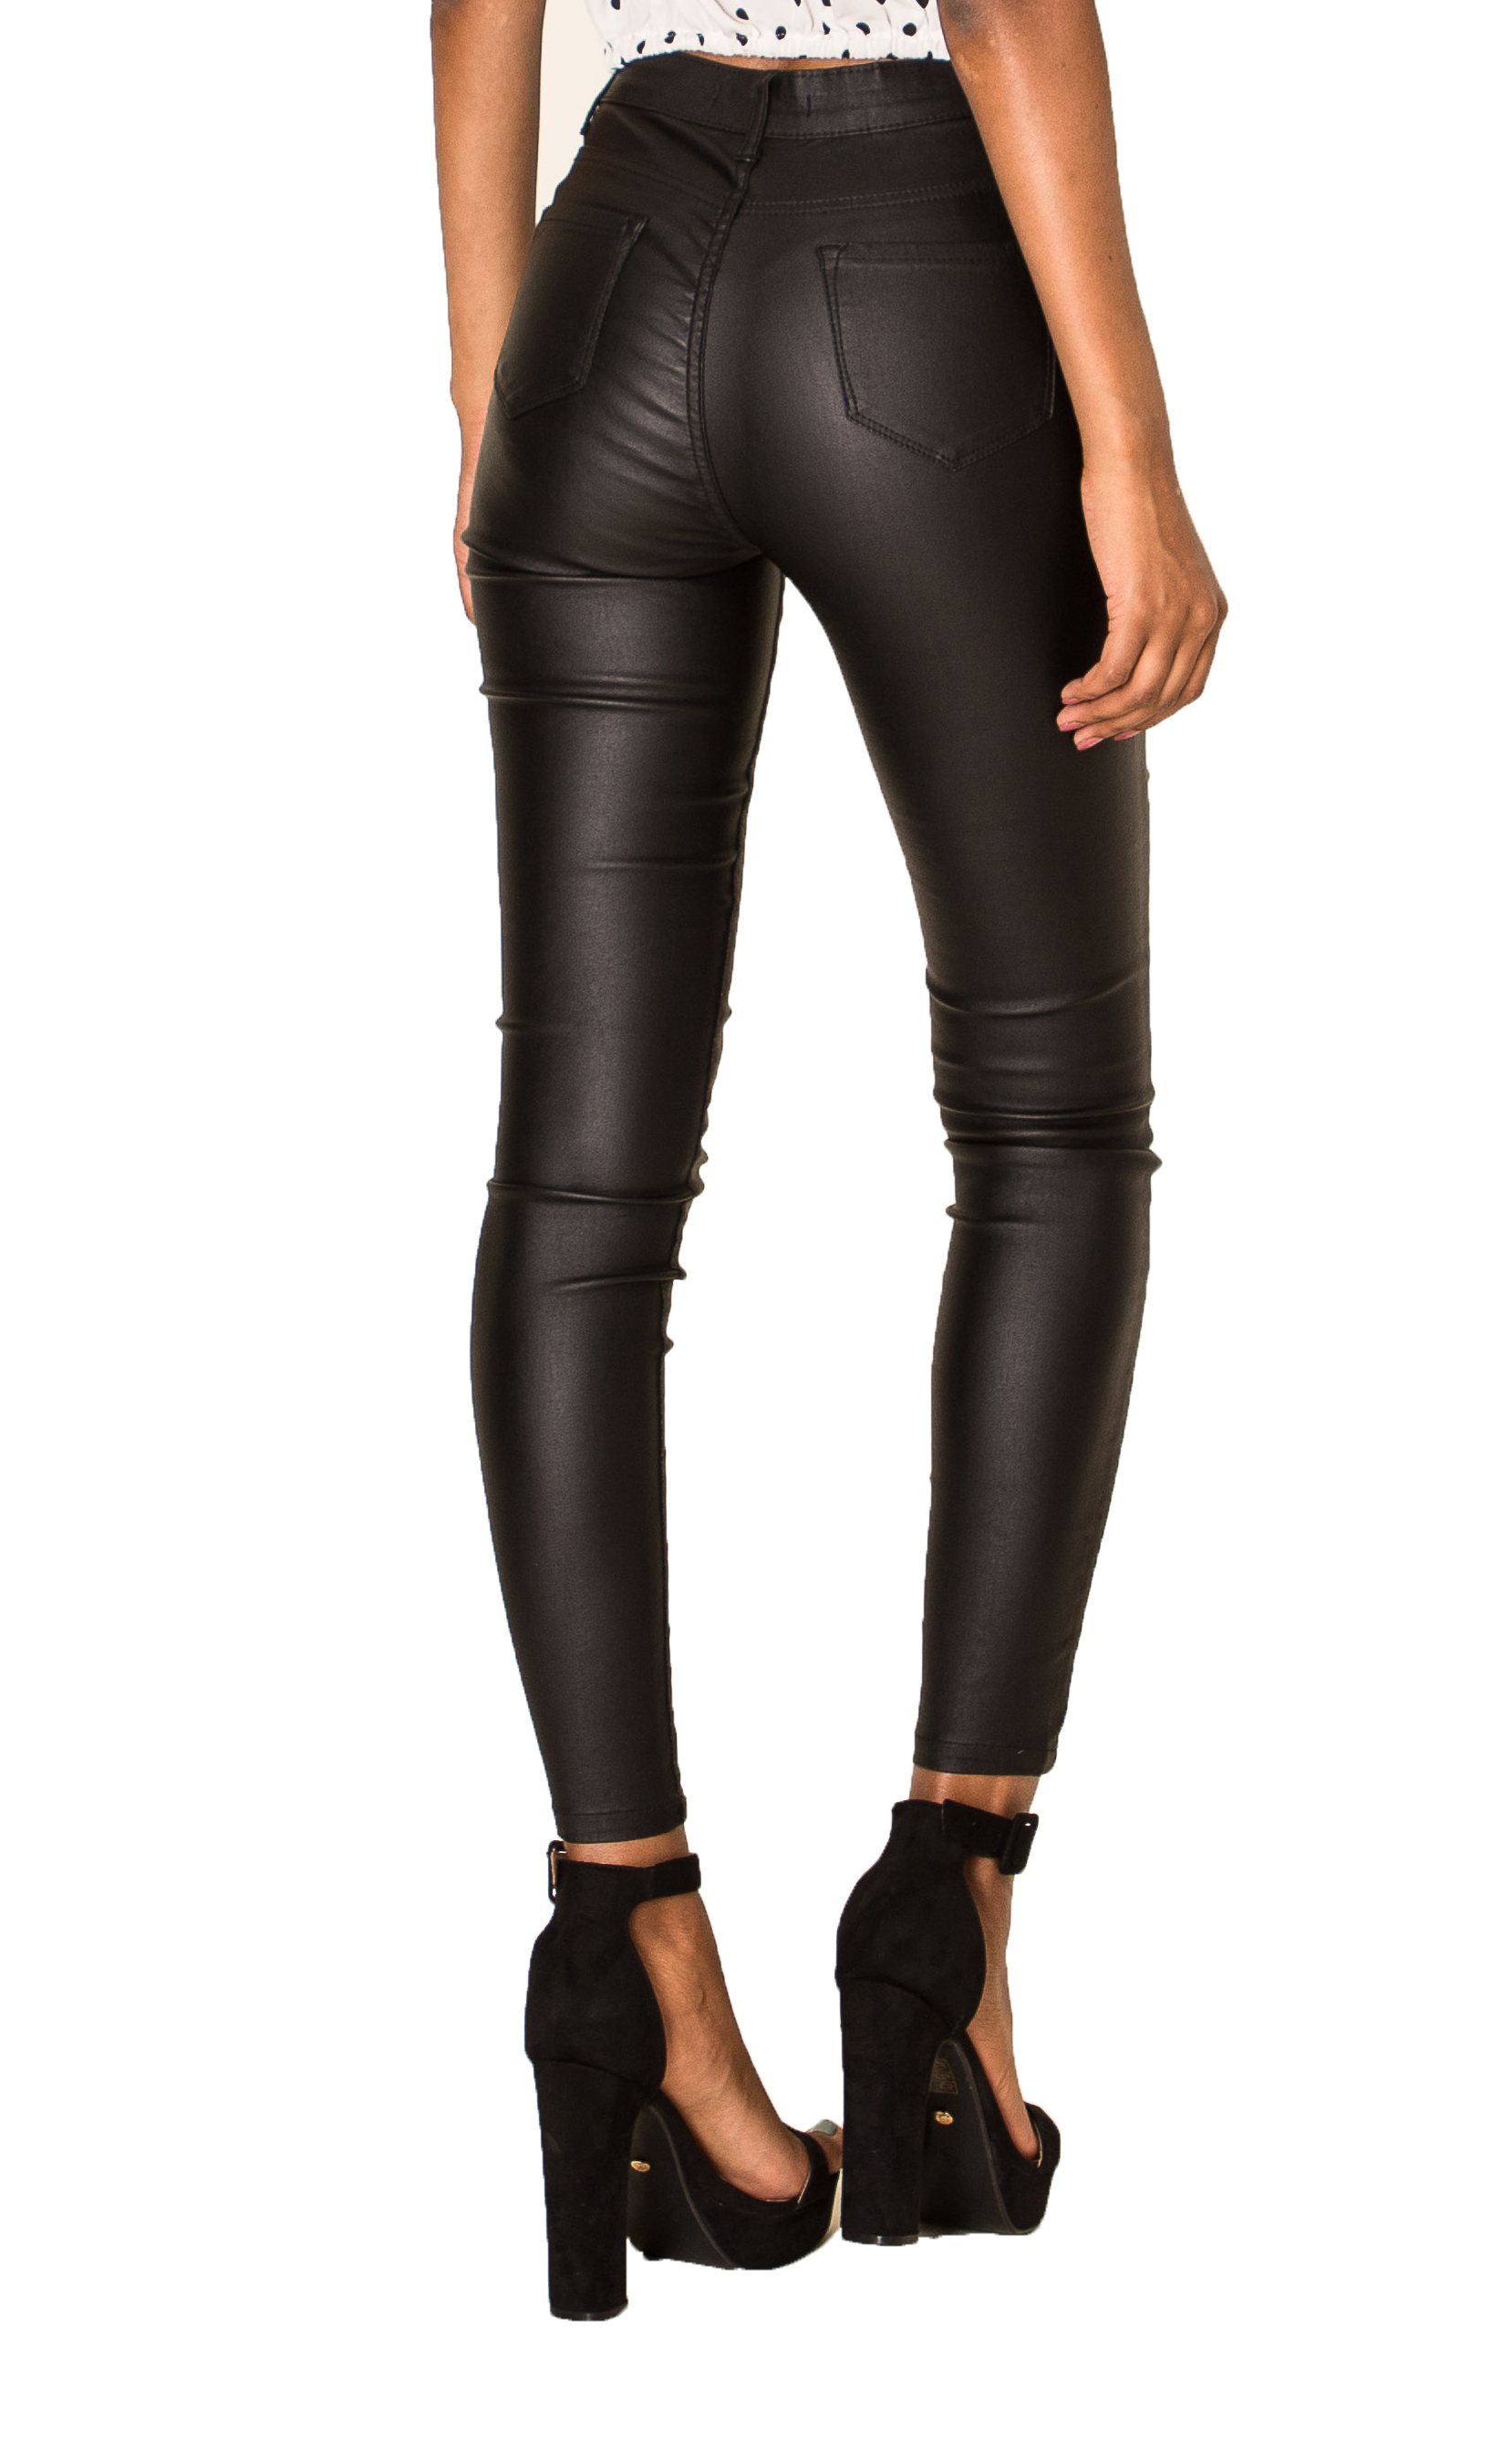 Womens Leather Look Trousers High Waist Faux Skinny Pants Stretch Leggings | eBay